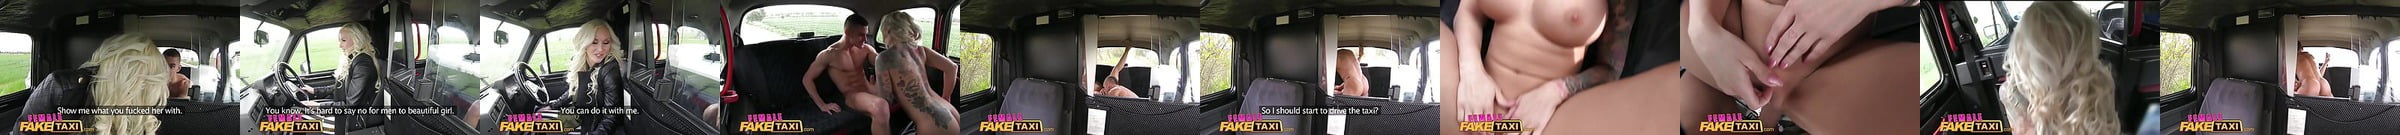 Aanbevolen Female Fake Taxi Hot Blonde Sucks And Fucks